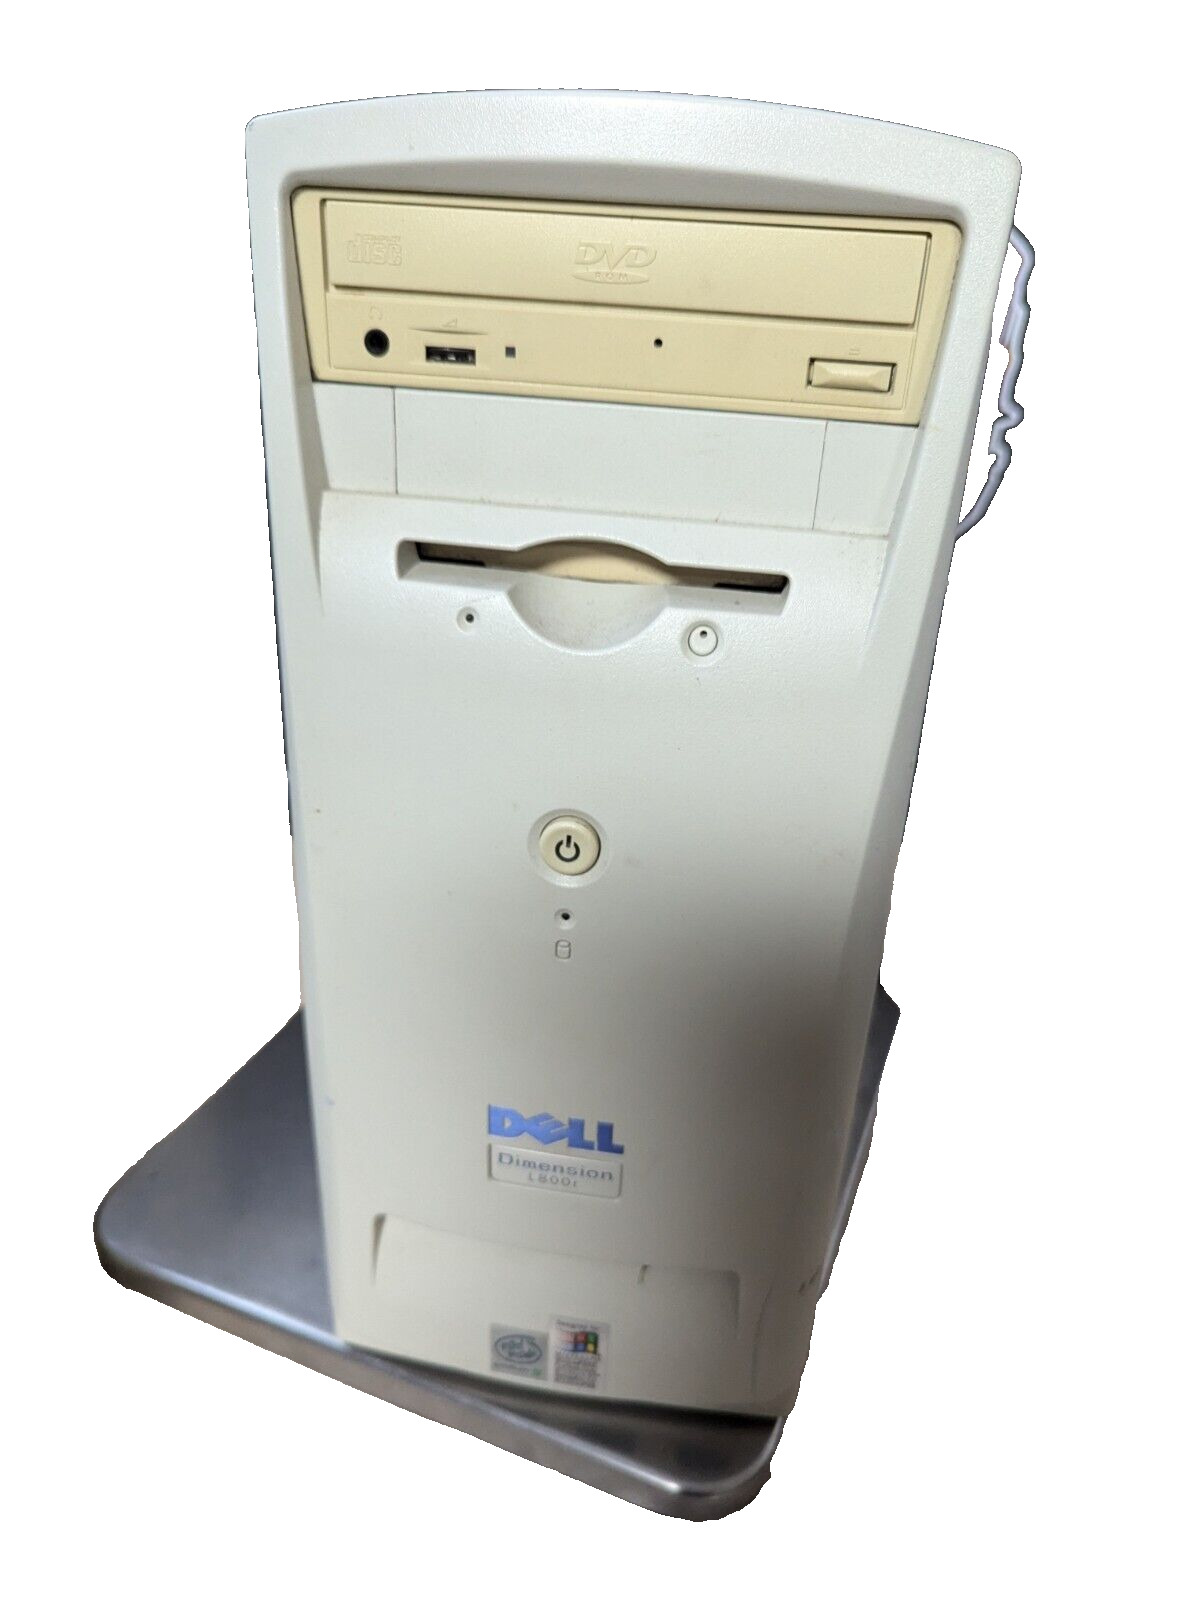 Dell Dimension L800i  Pentium III 256K RAM Vintage Gaming Desktop Computer